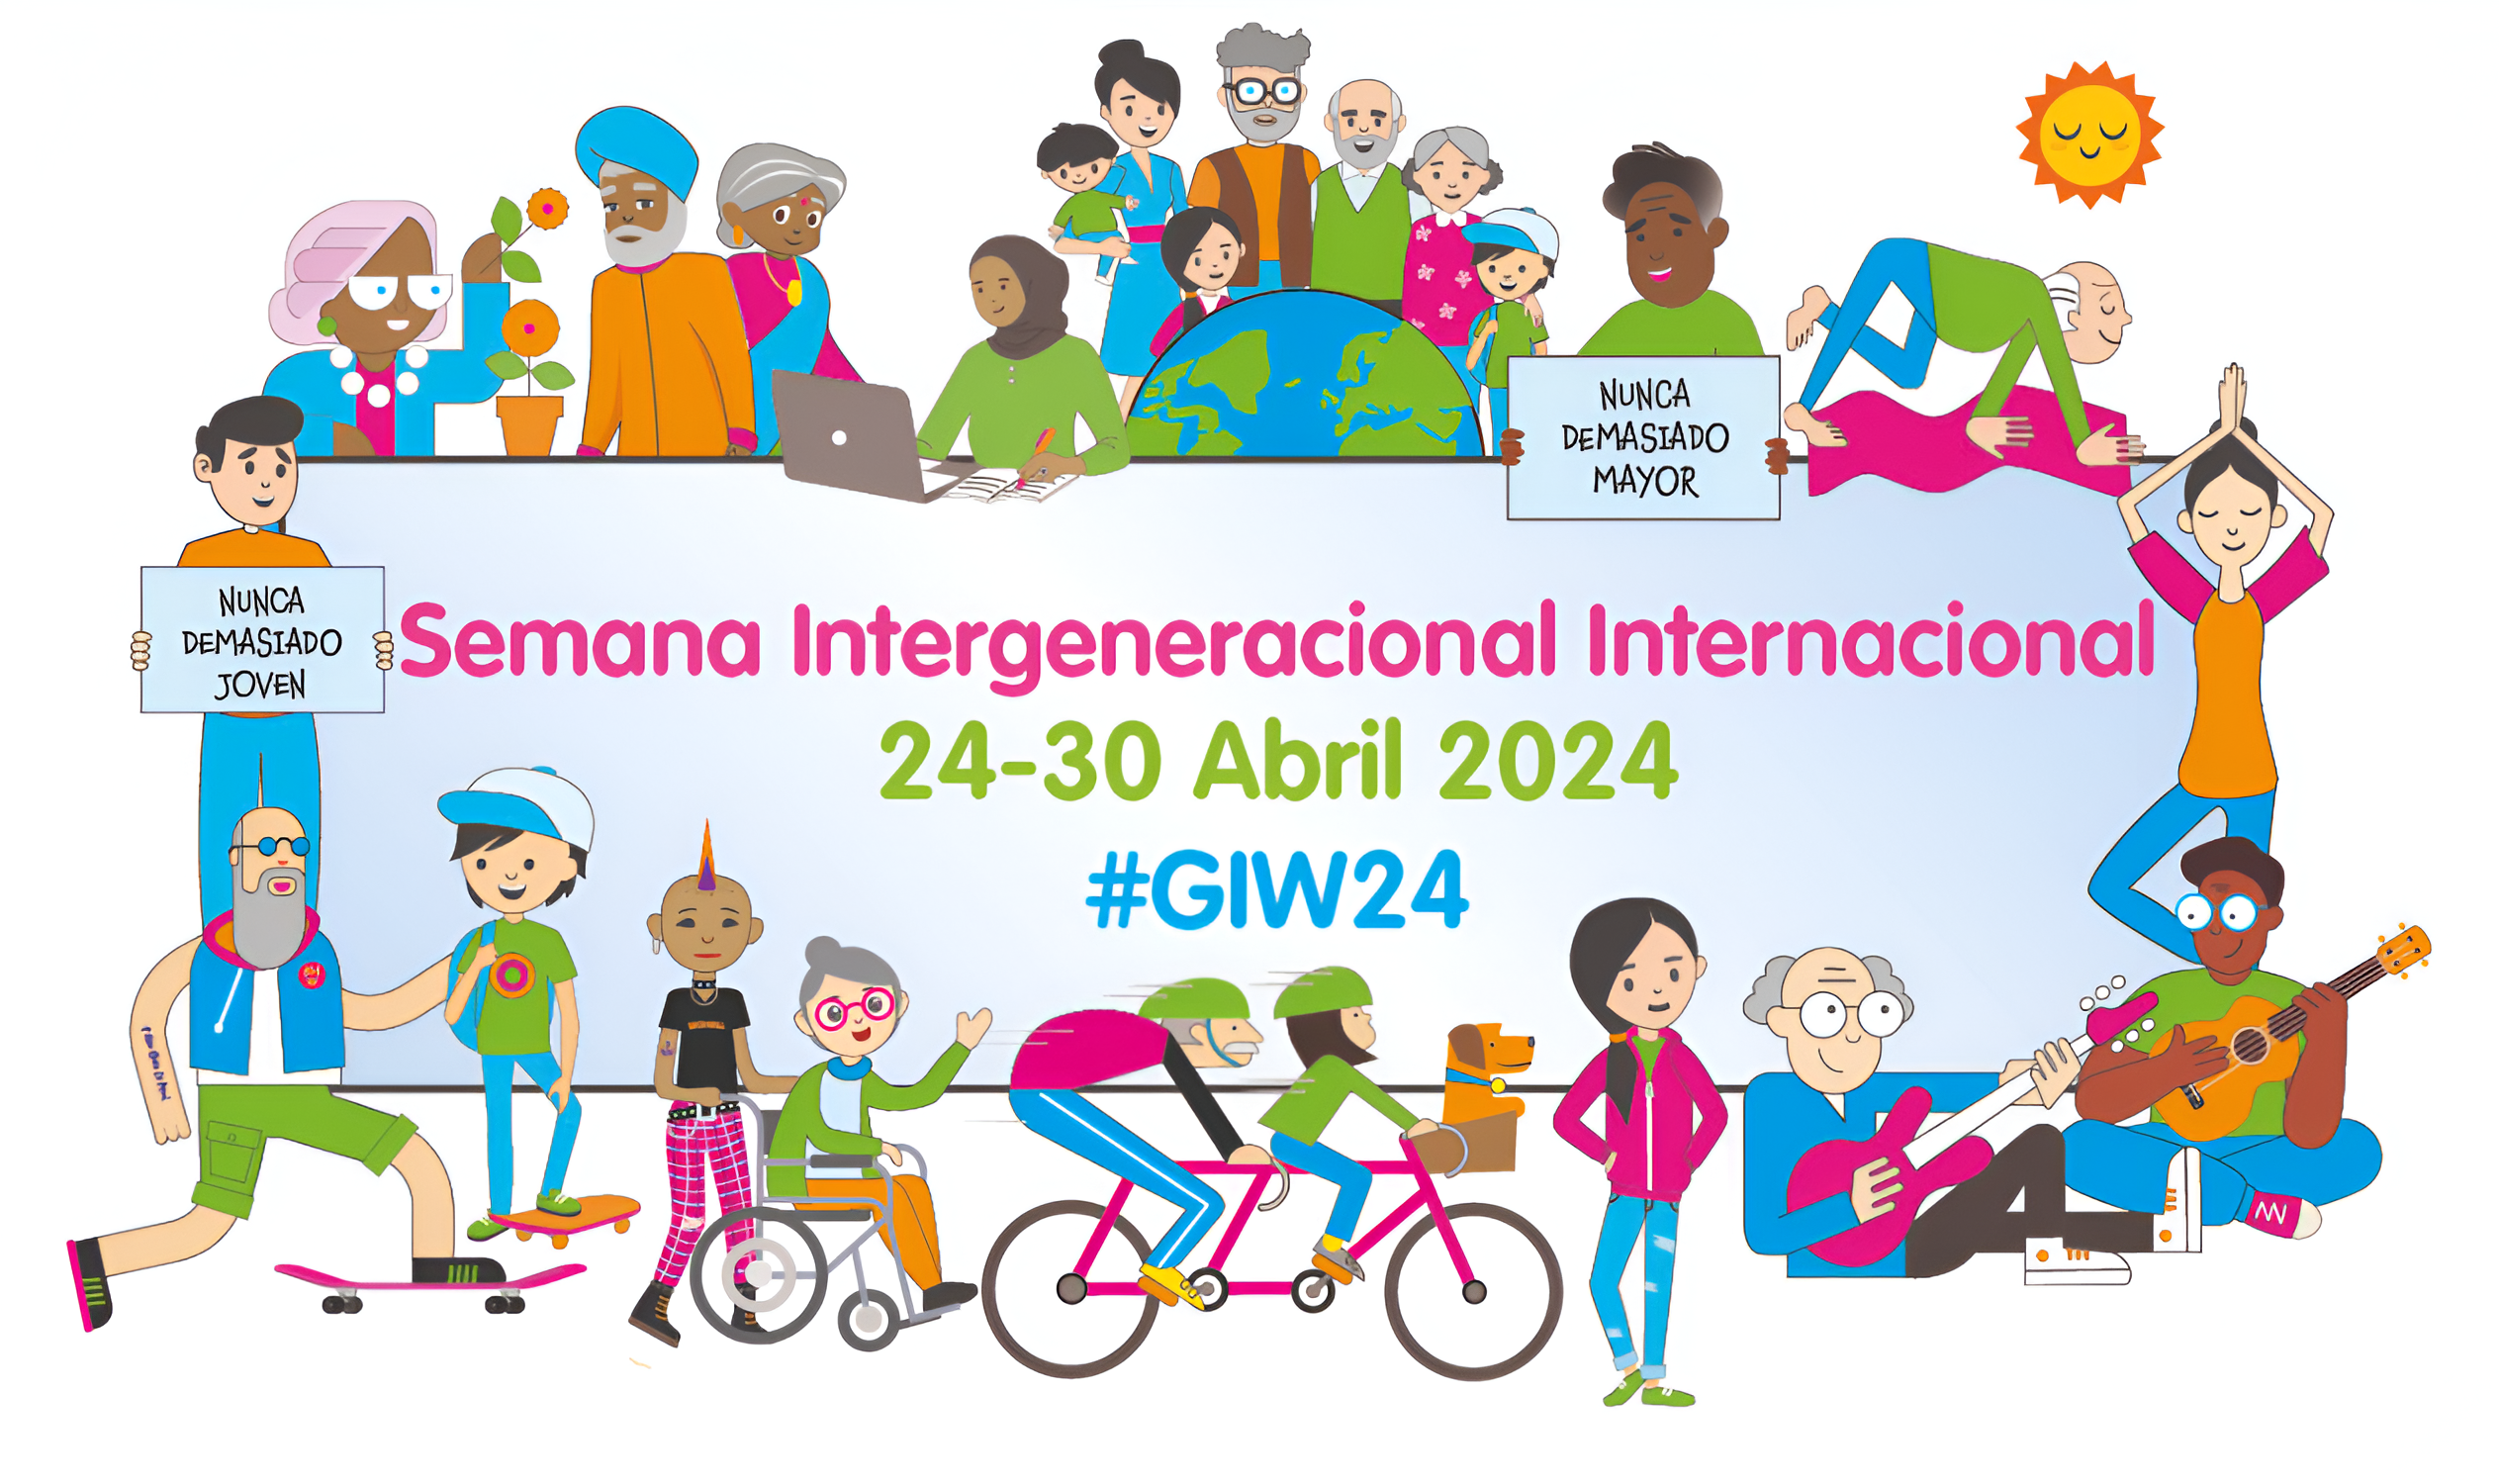 Global Intergenerational Week 2024